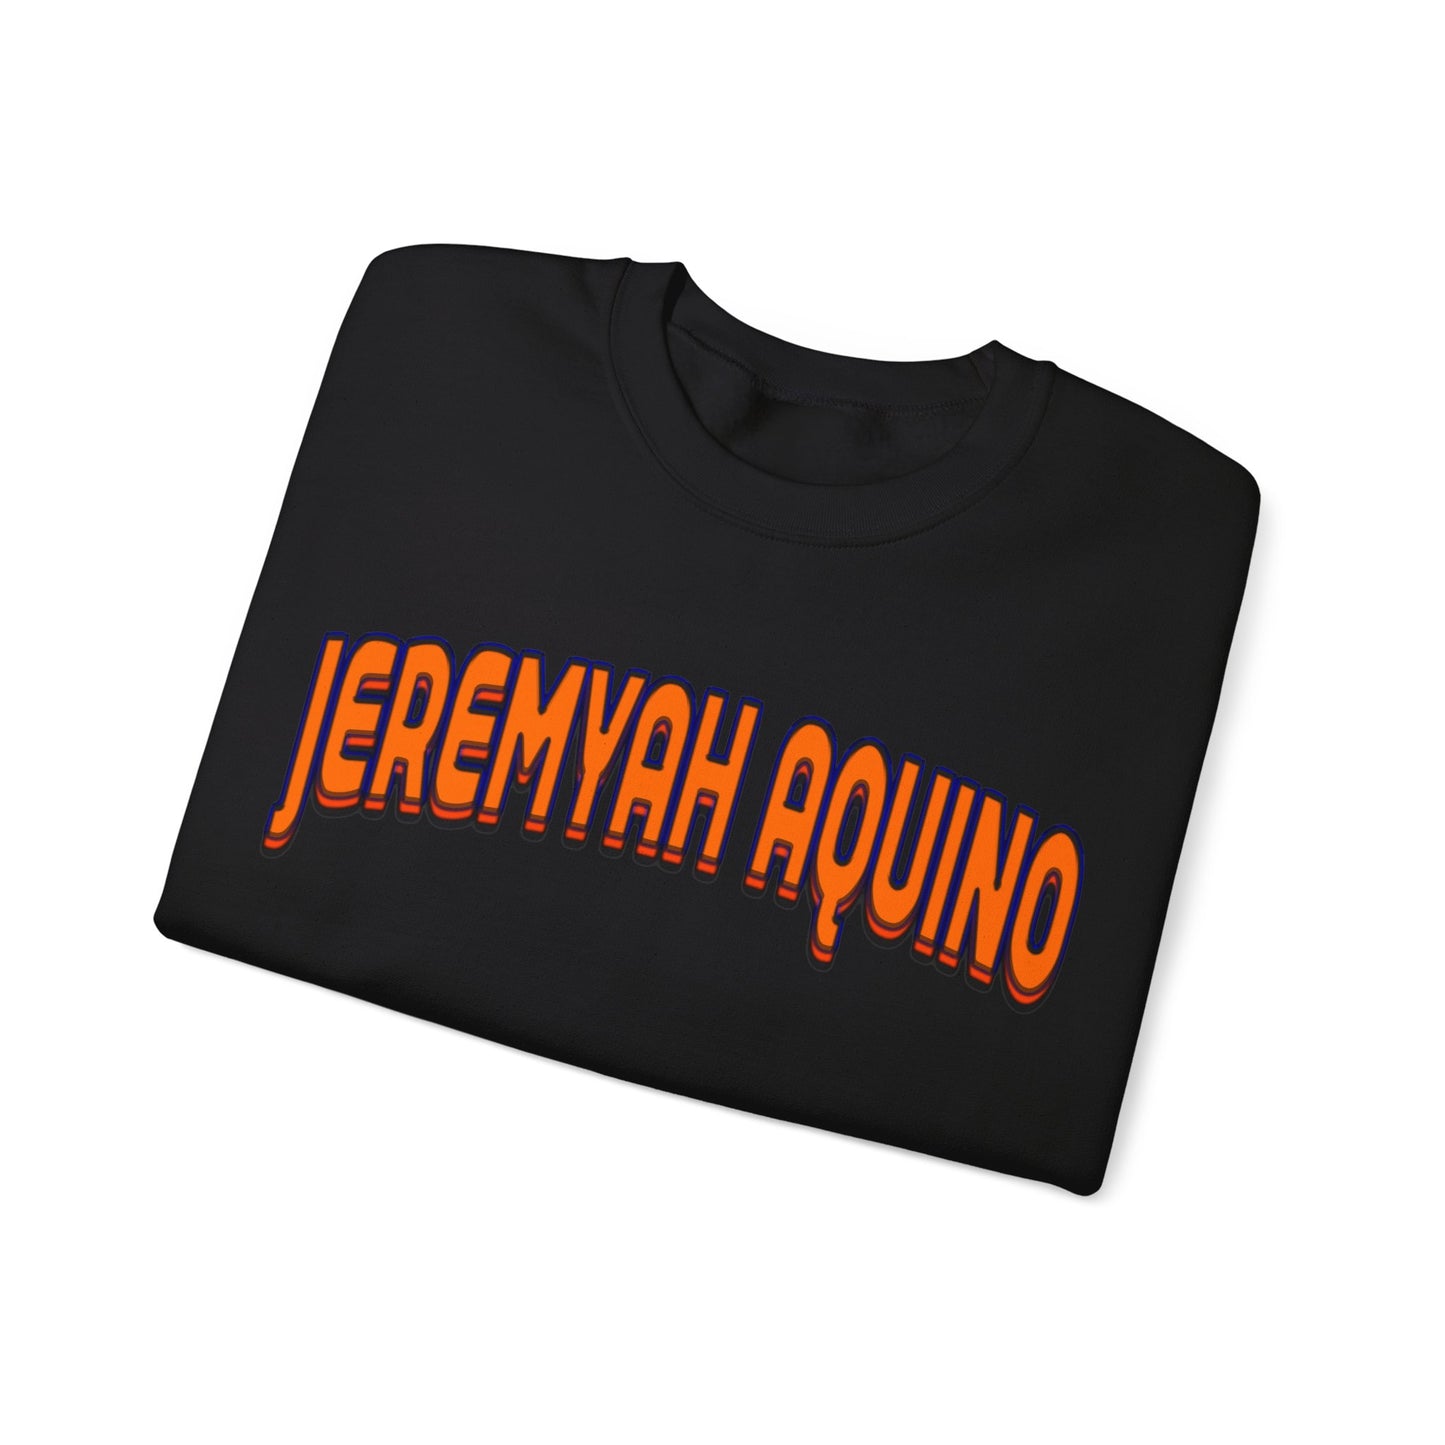 Jeremyah Aquino Crewneck Sweatshirt